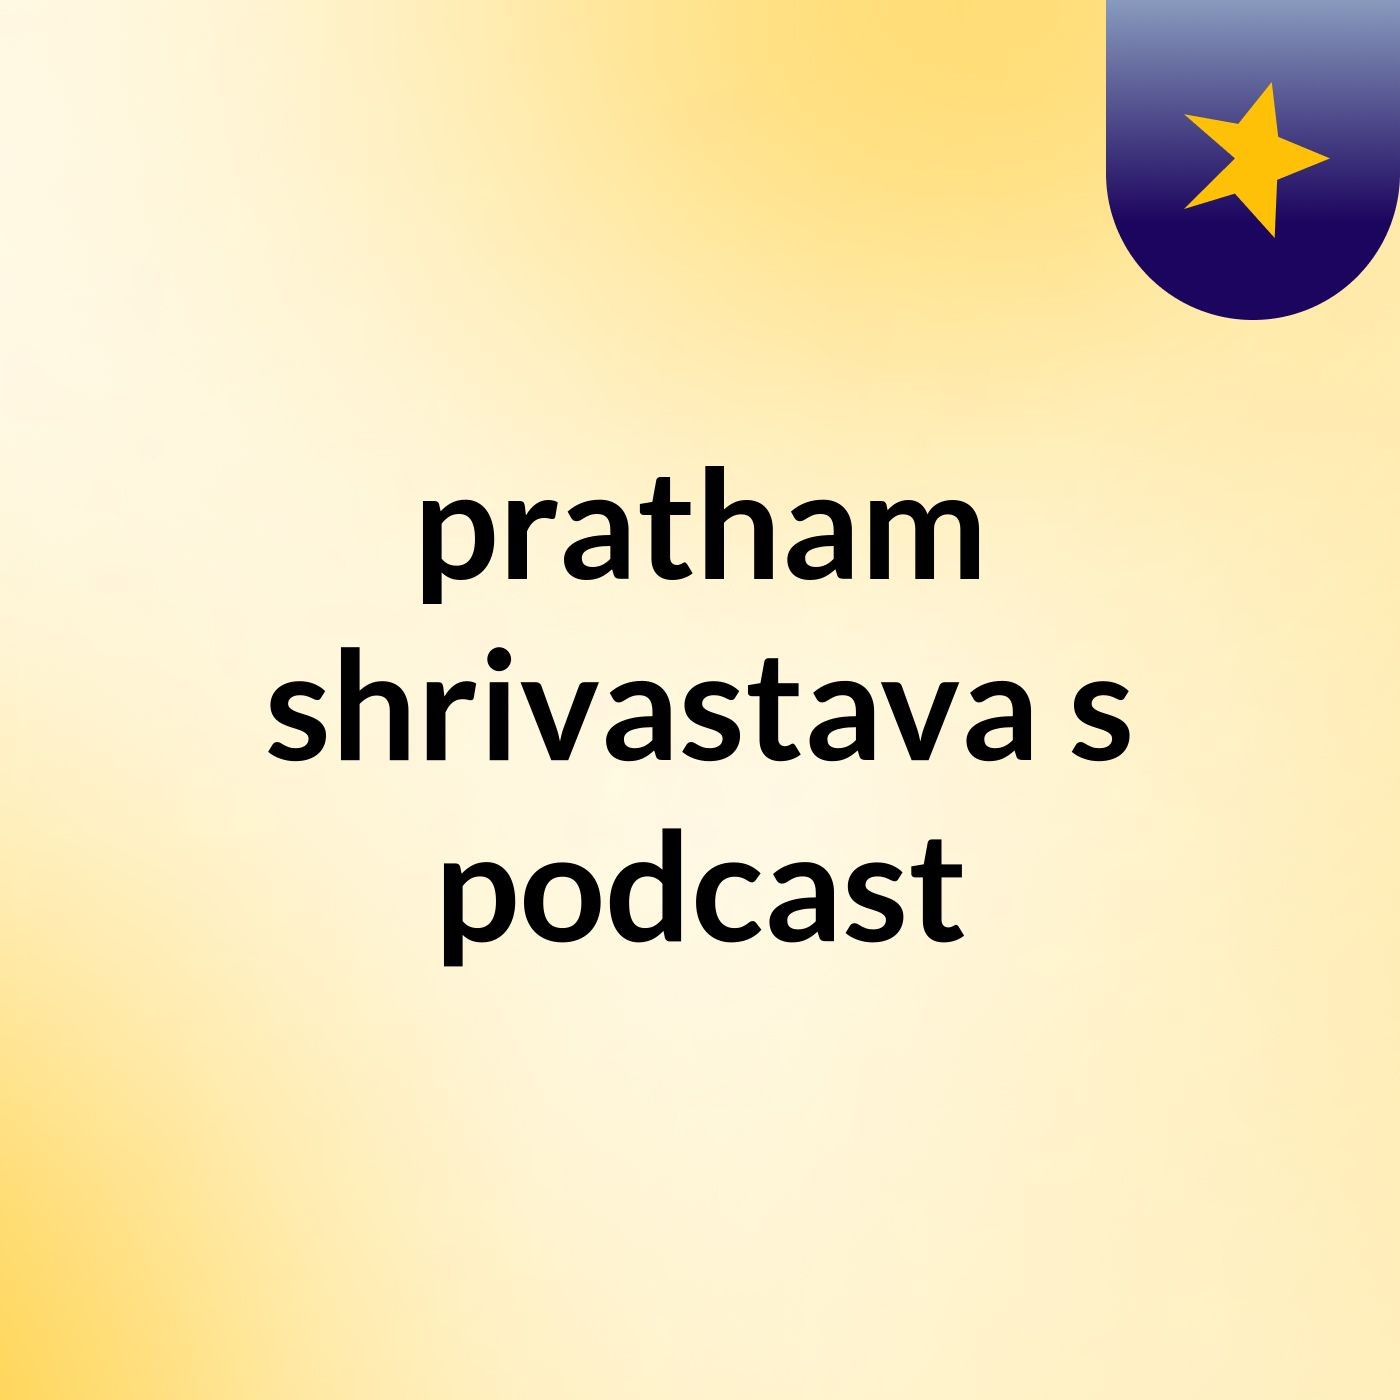 Episode 2 - pratham shrivastava's podcast